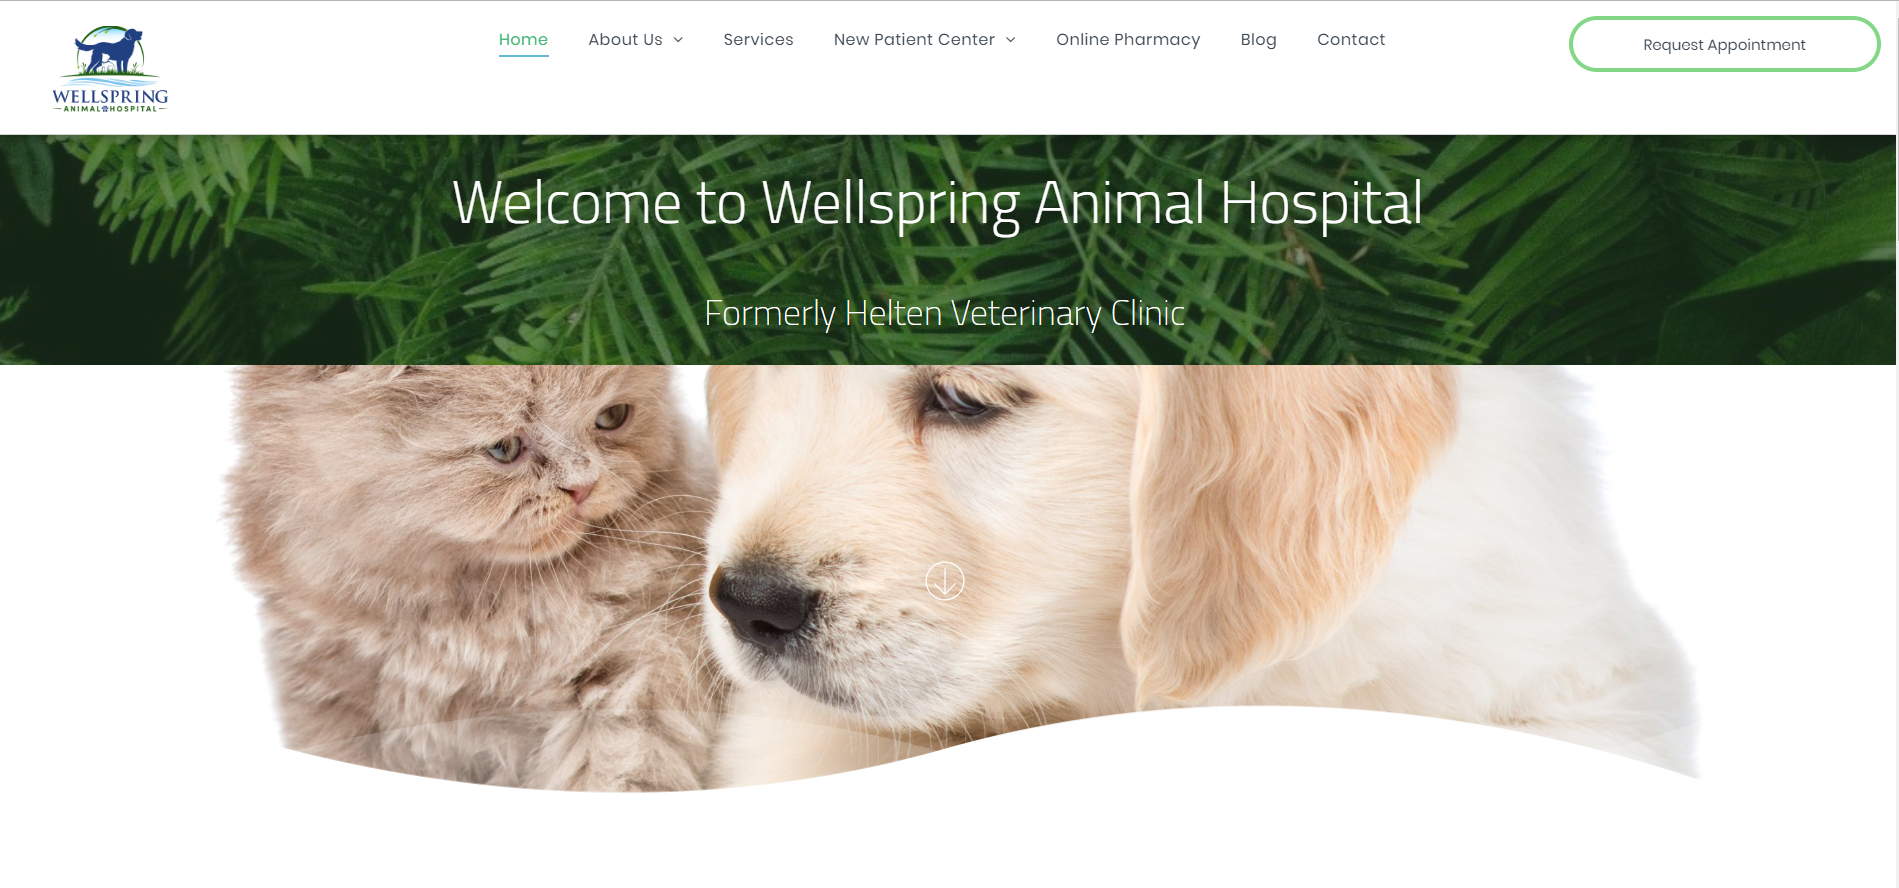 Wellspring Animal Hospital Website Link